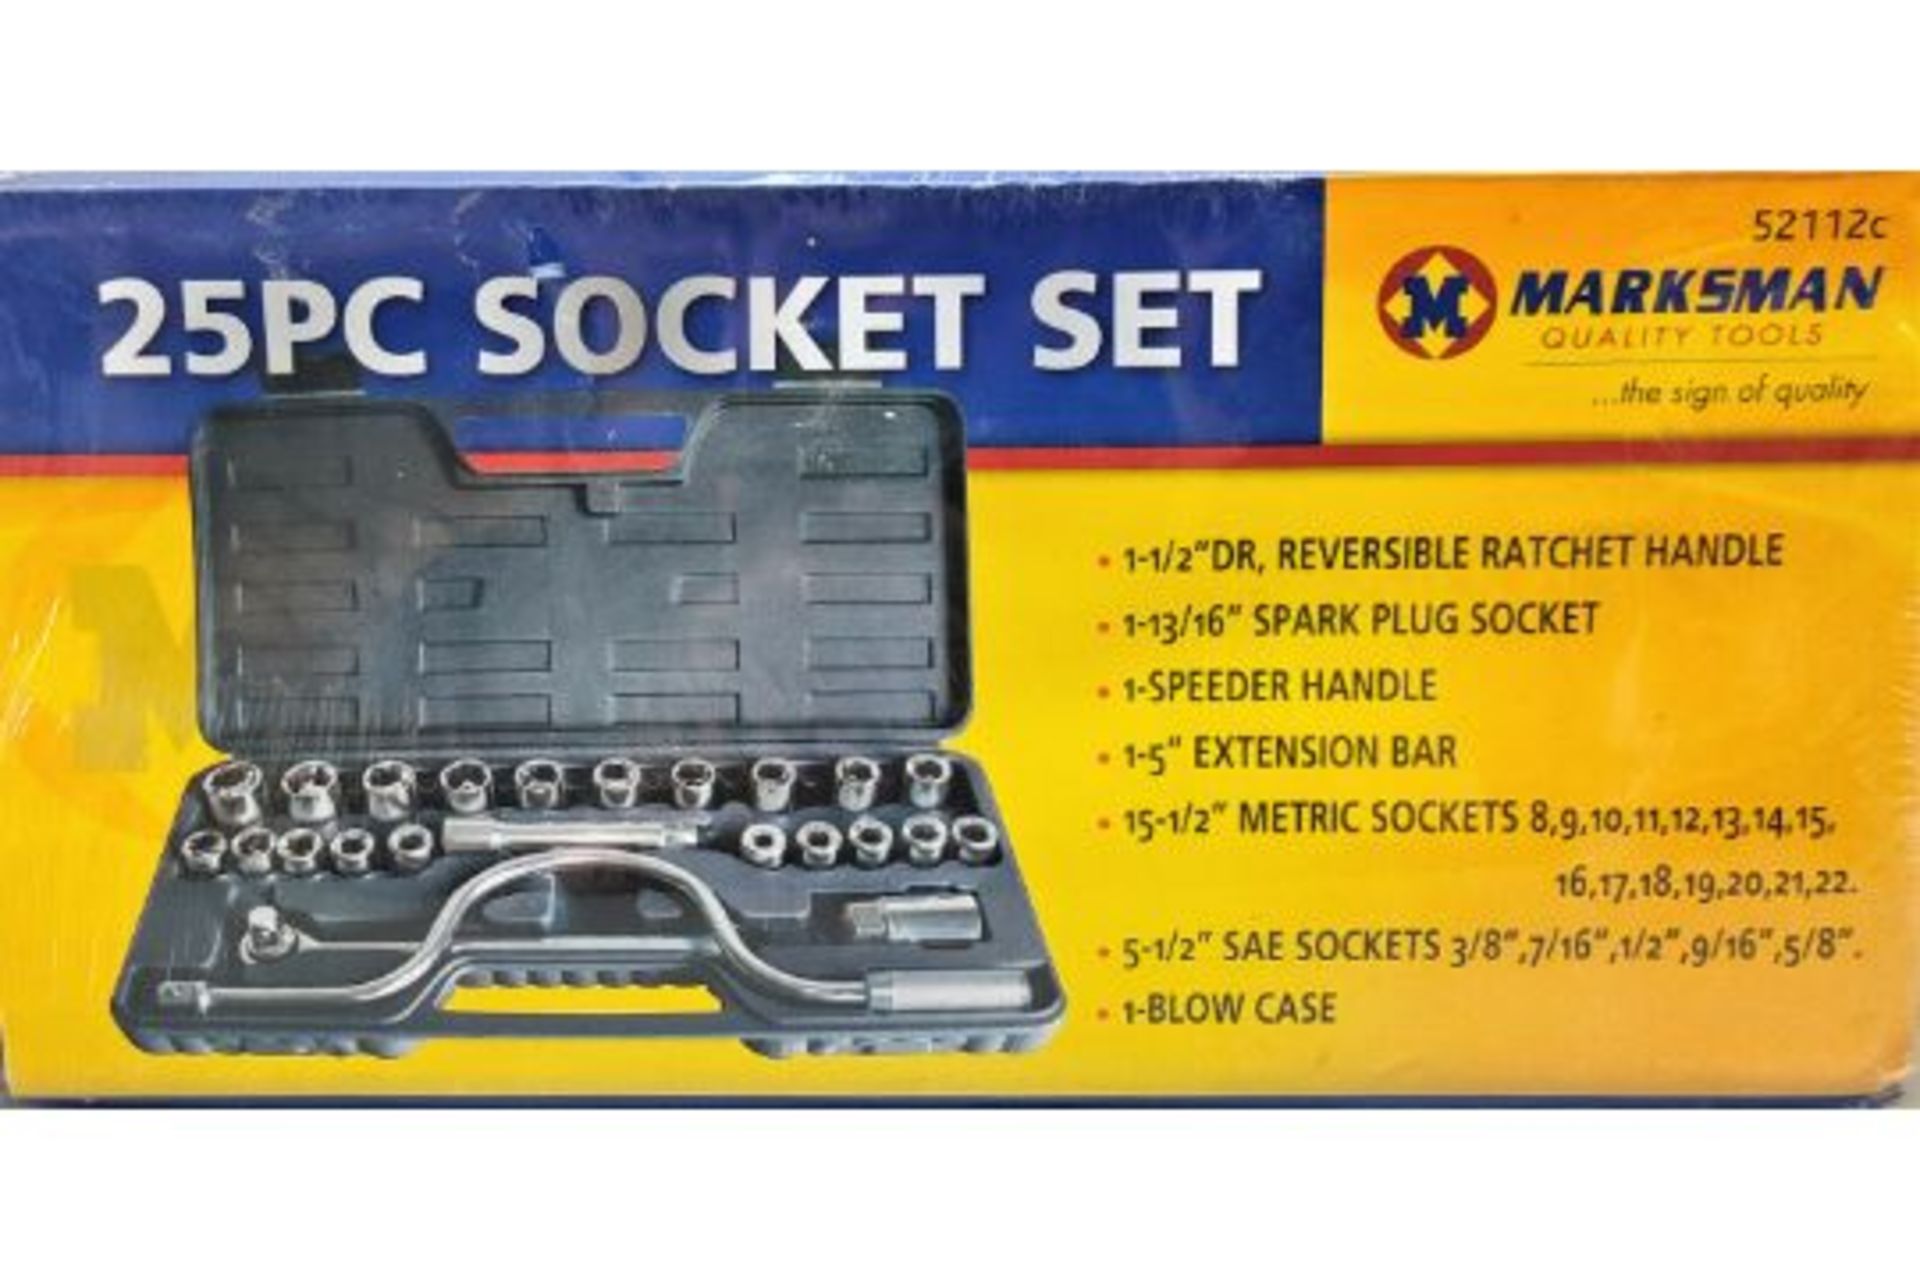 New Marksman 25pc Socket Set